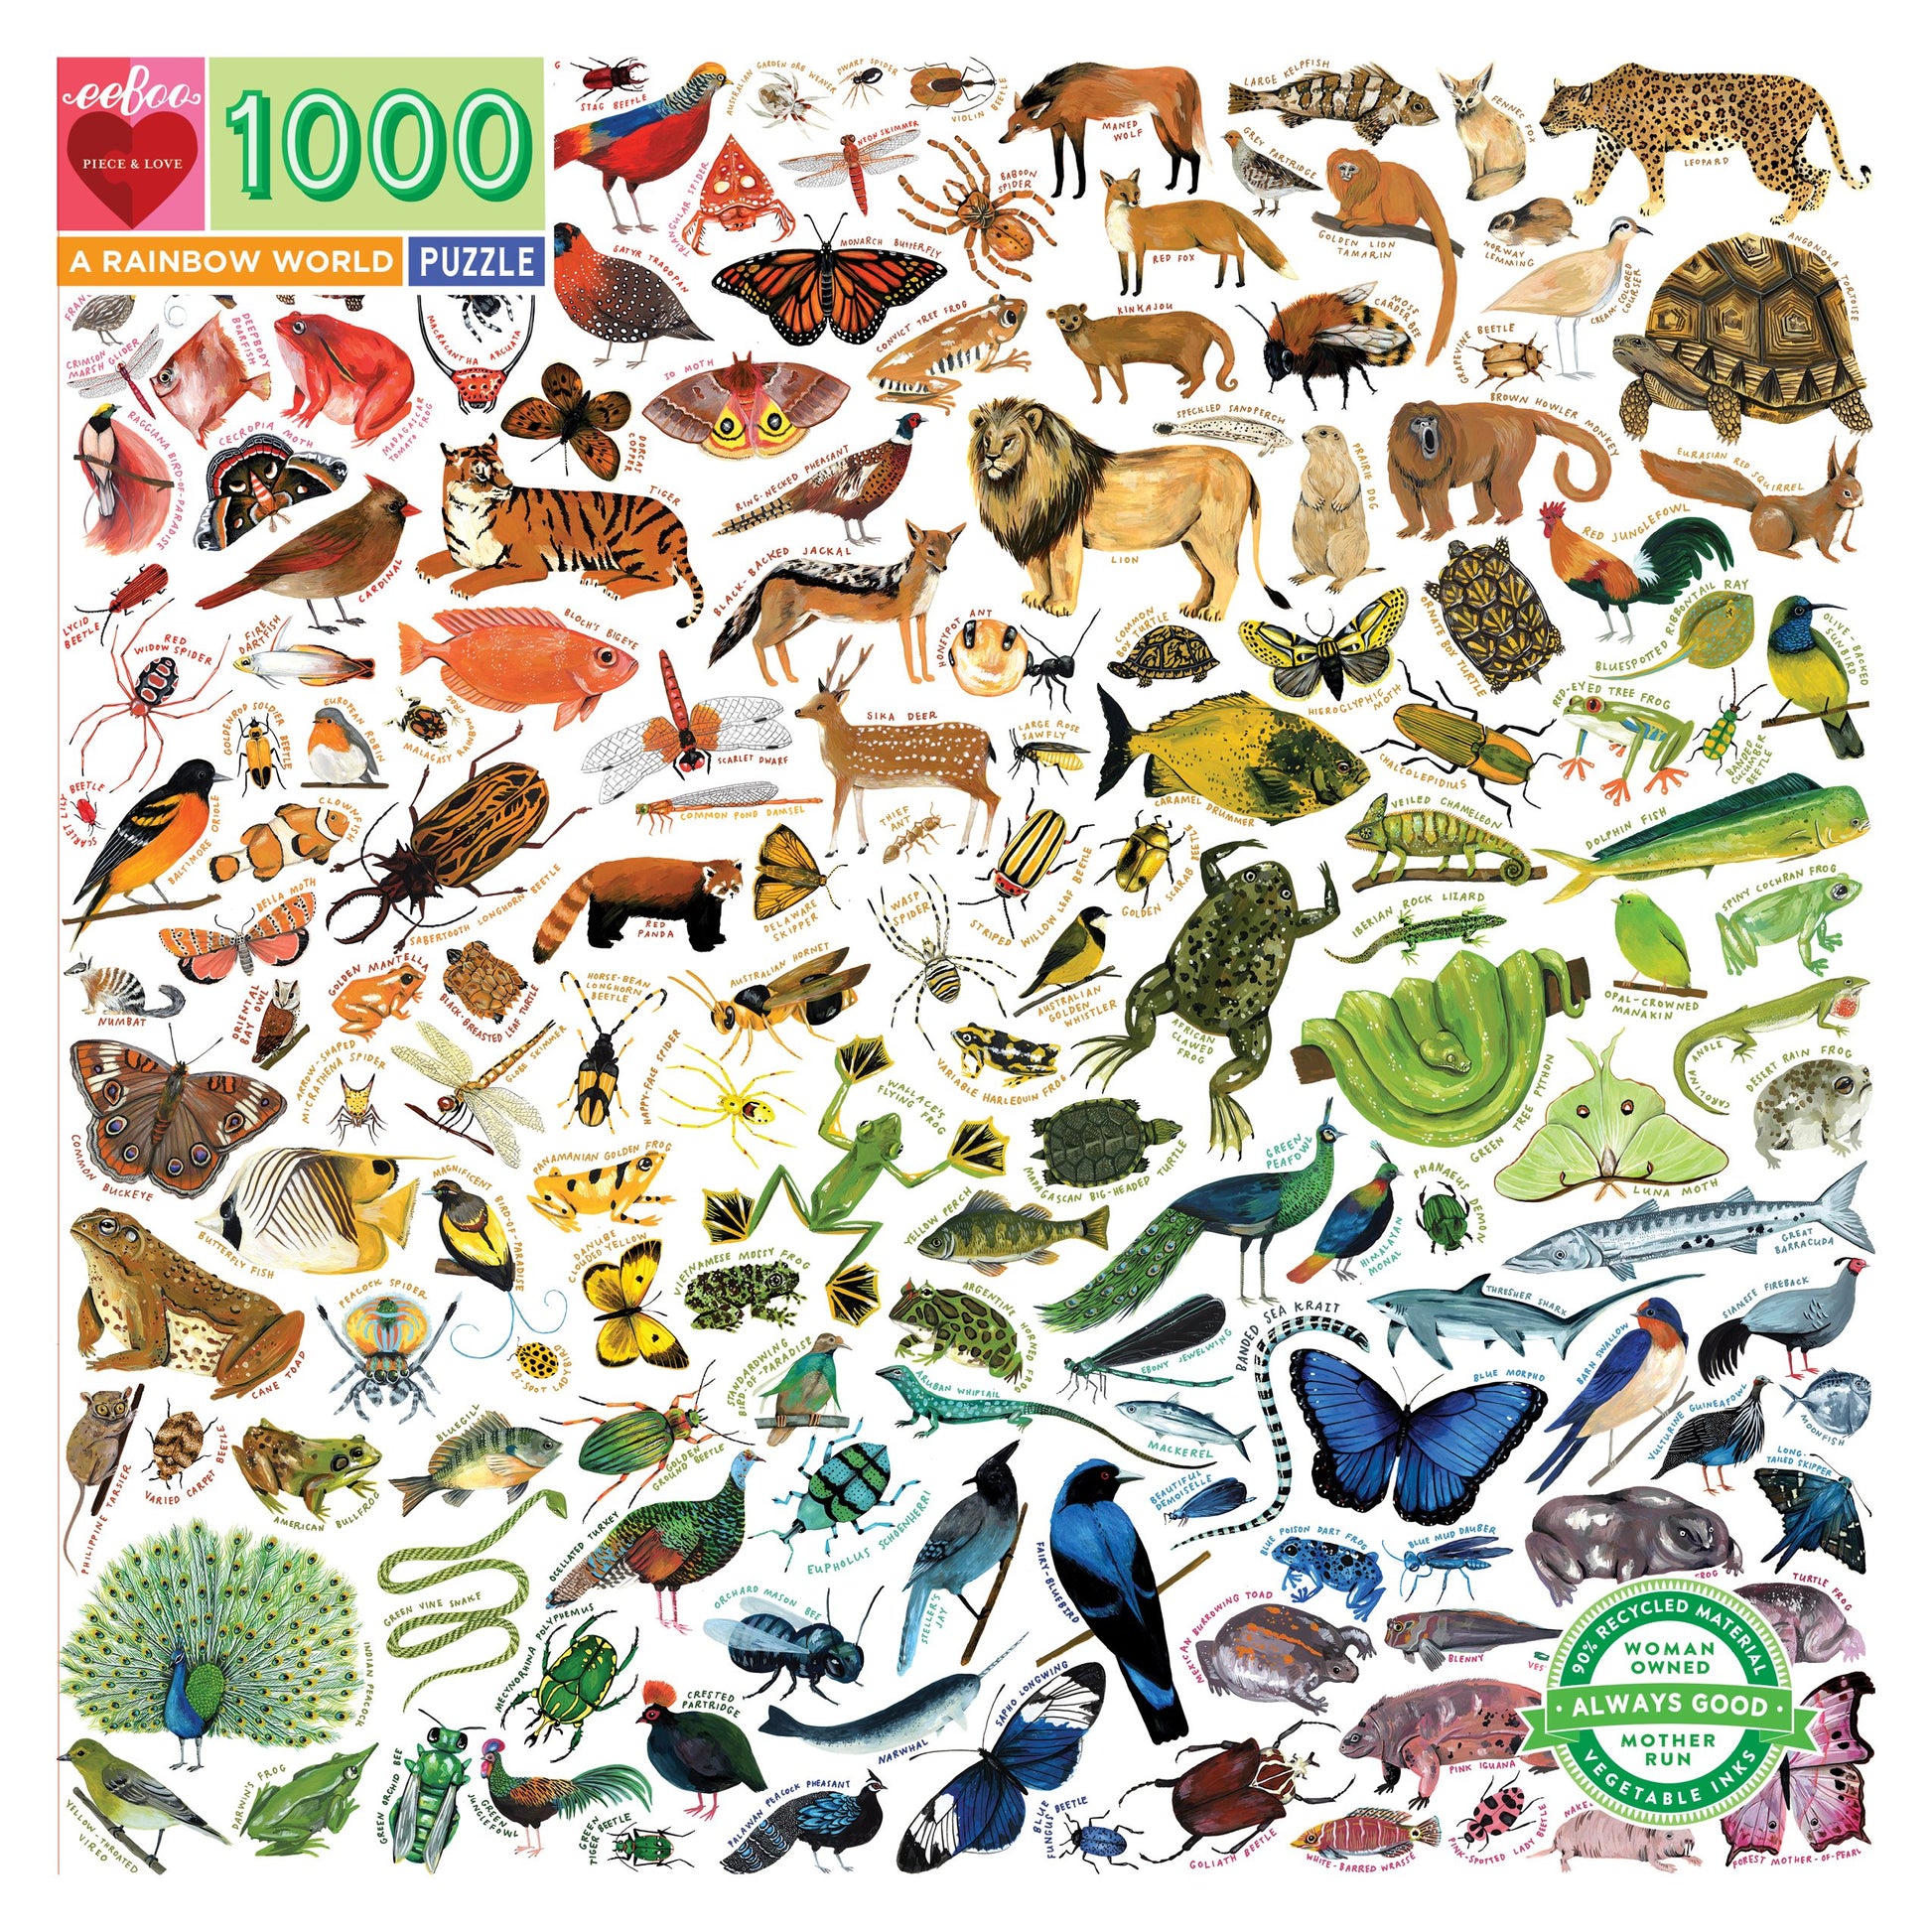 eeBoo 1000pc Puzzle A Rainbow World The Toy Wagon